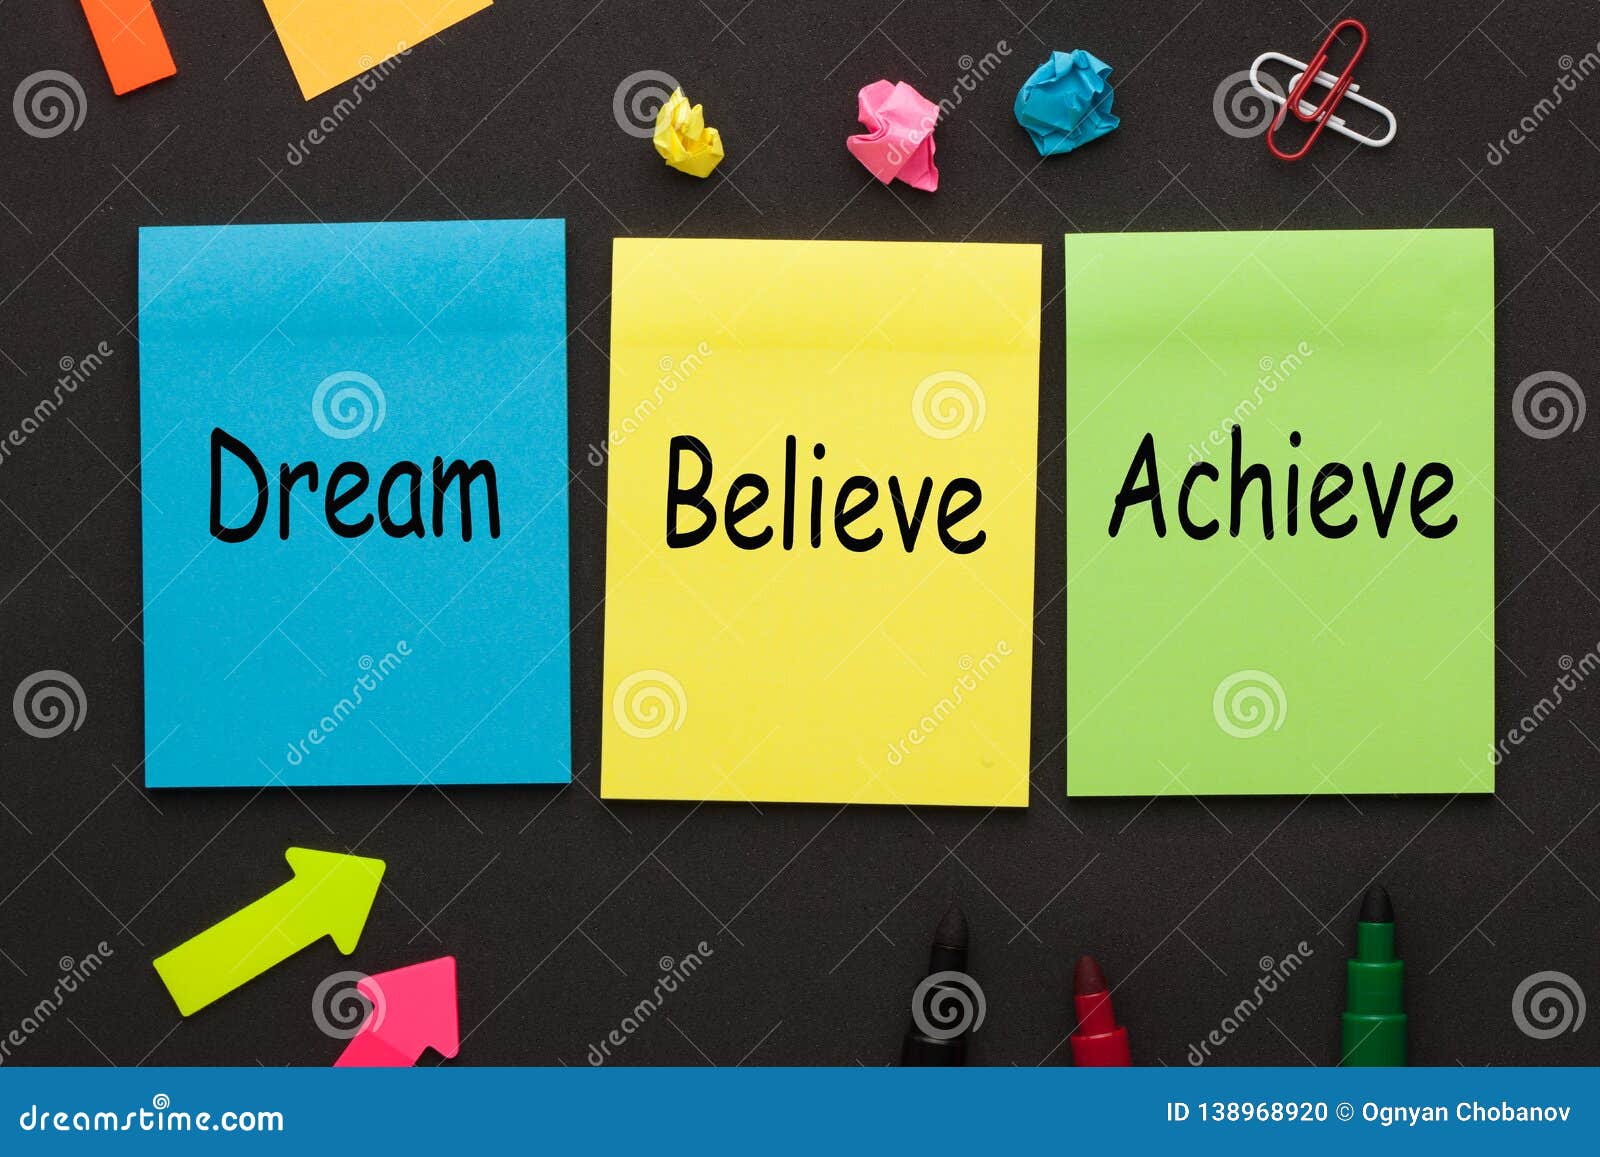 dream believe achieve